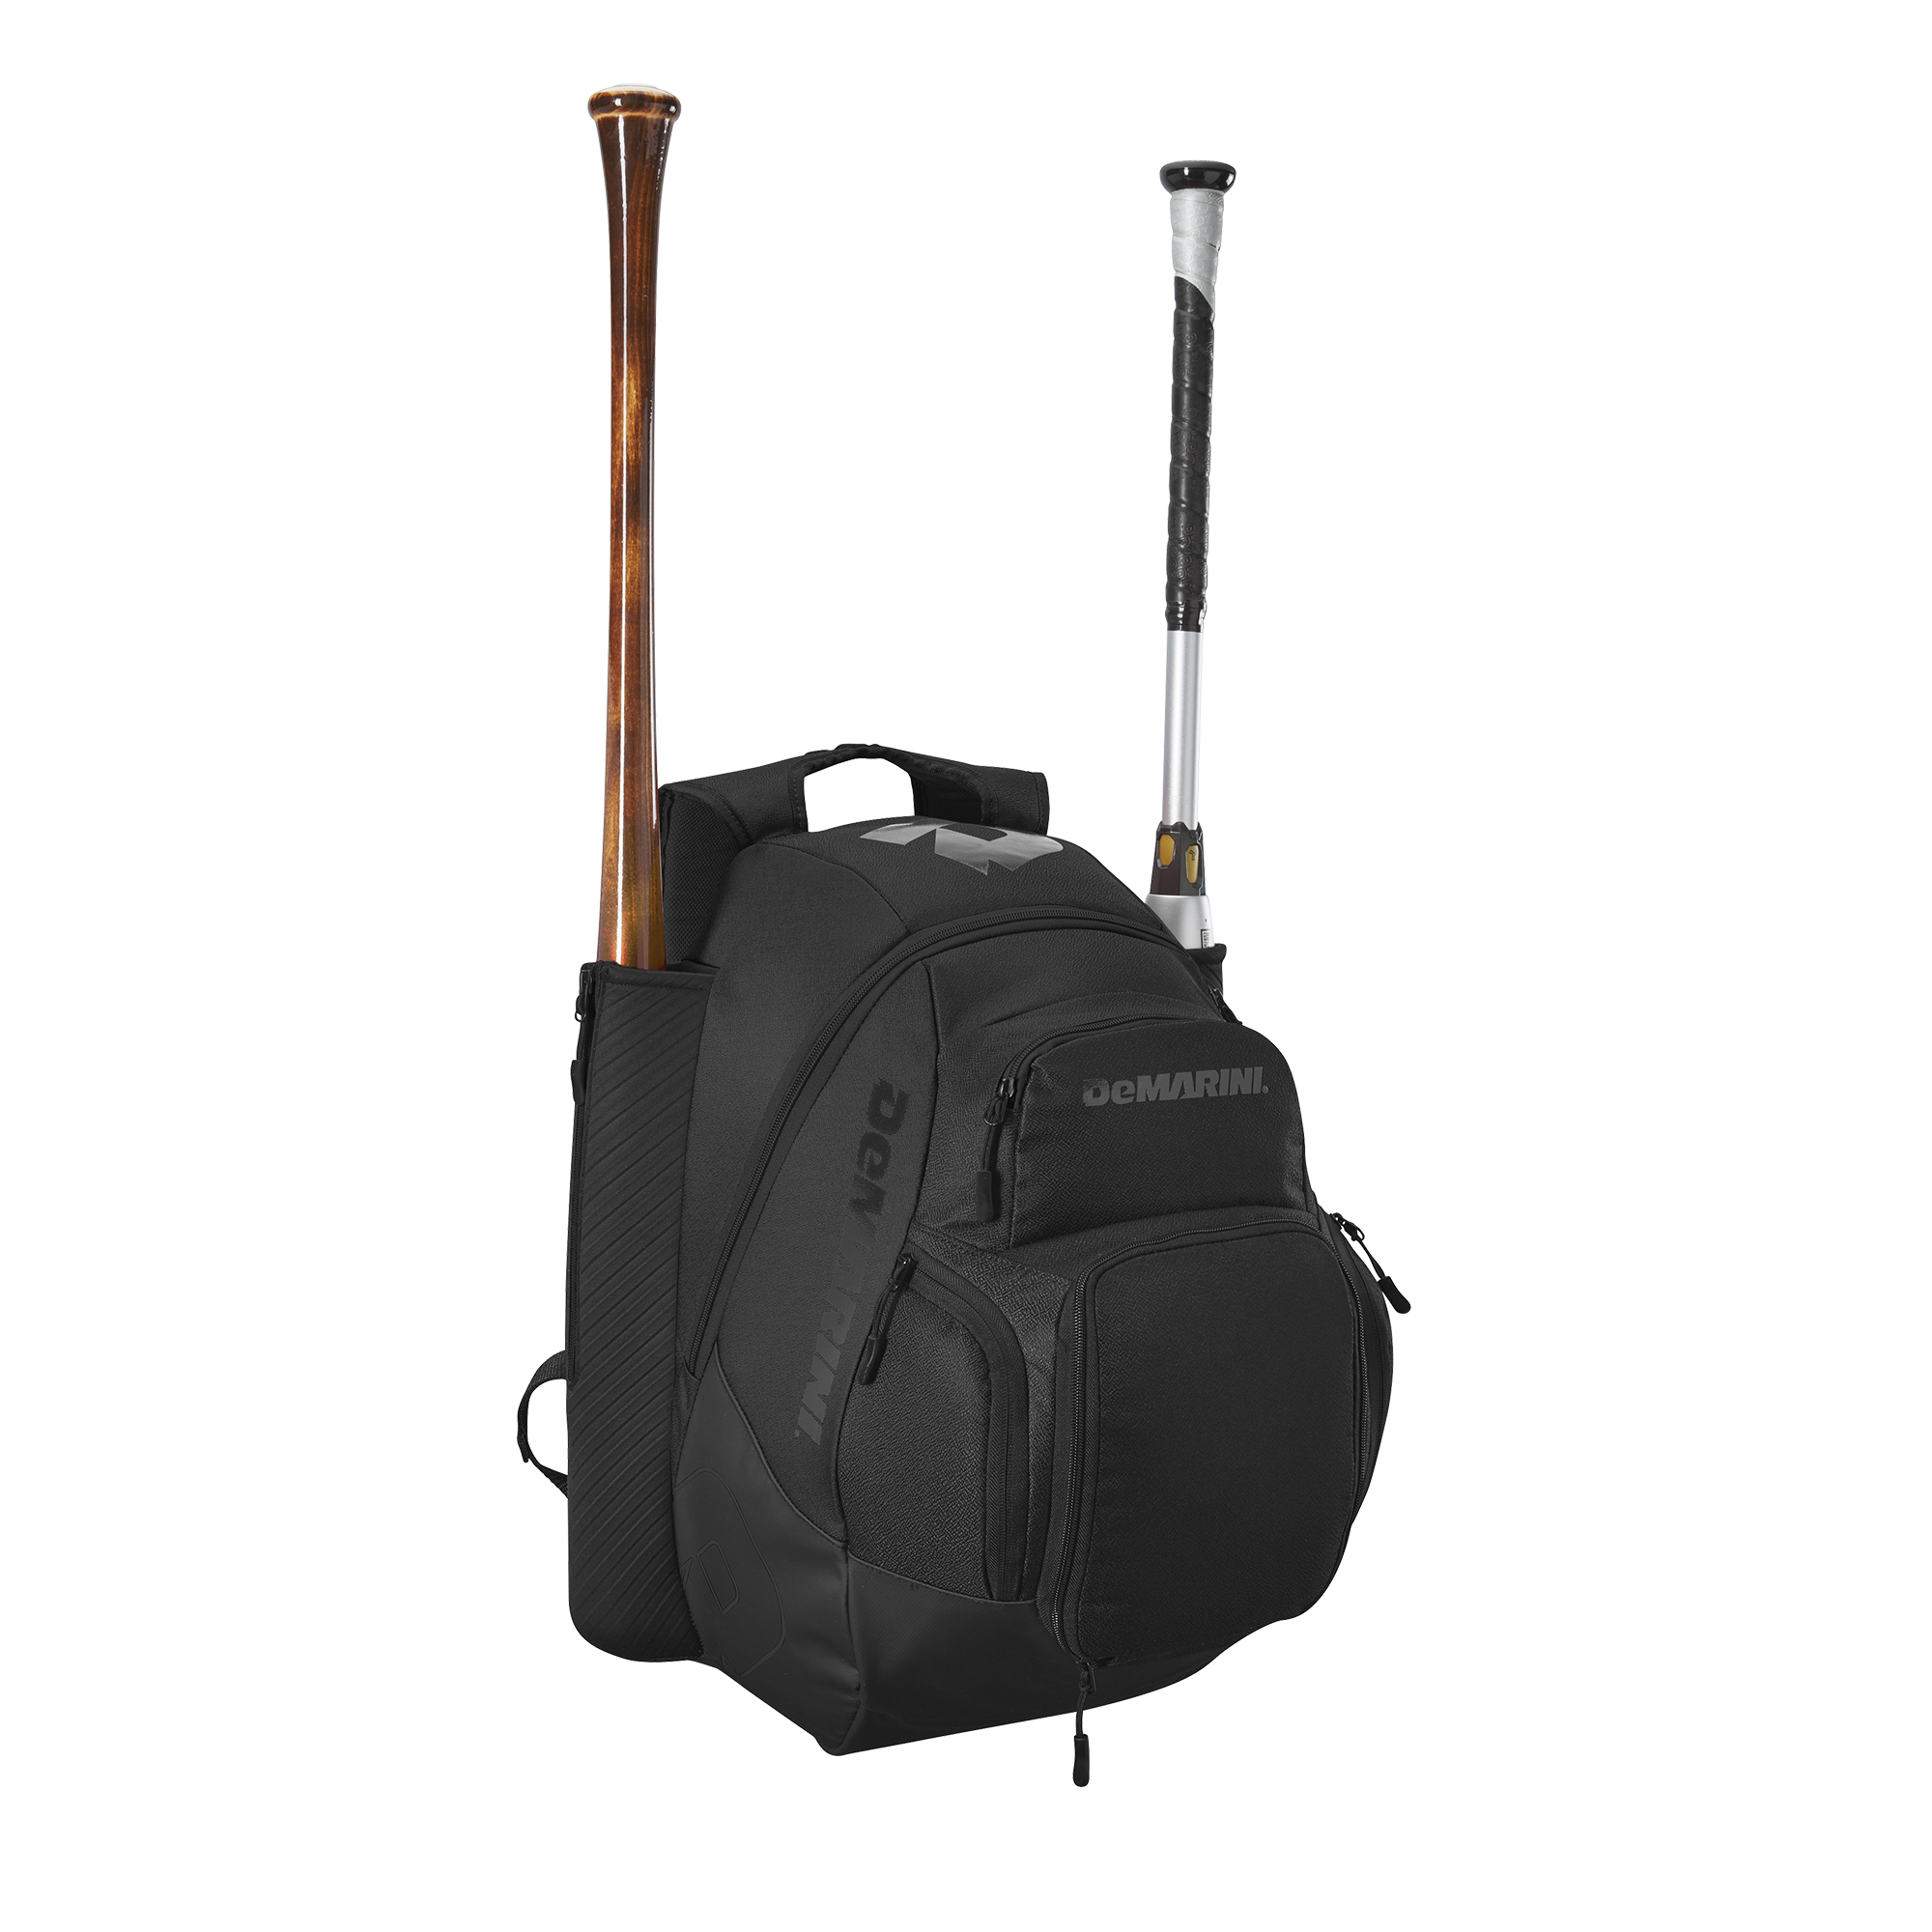 DeMarini Voodoo OG Backpack - WB57117085 - Bagger Sports